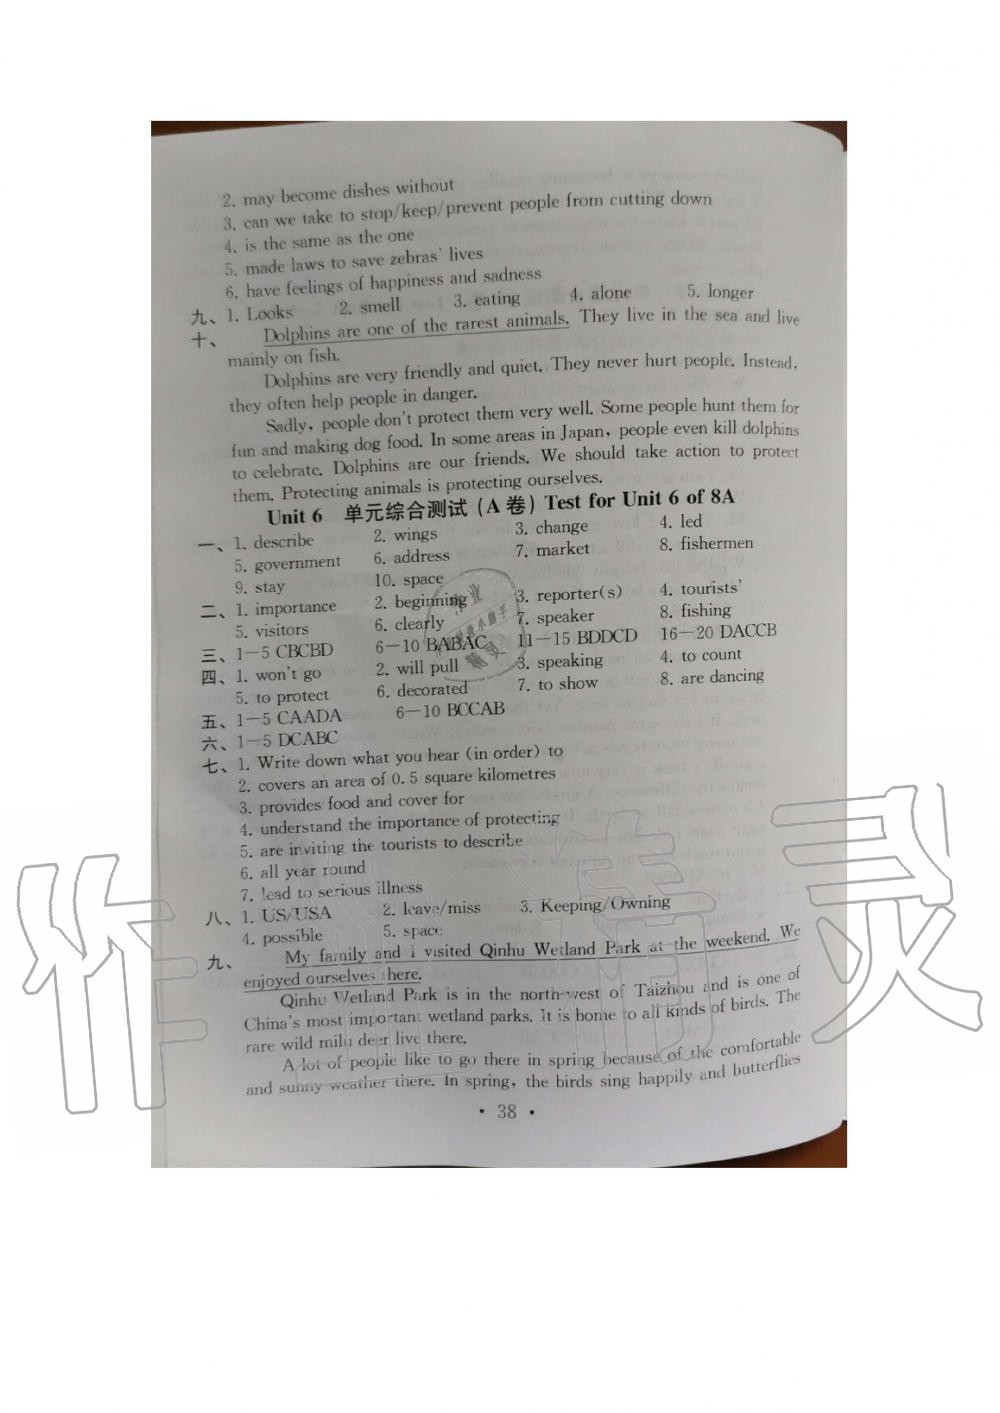 单元综合测试卷（A卷） Test for Unit 6 of 8A - 参考答案第38页